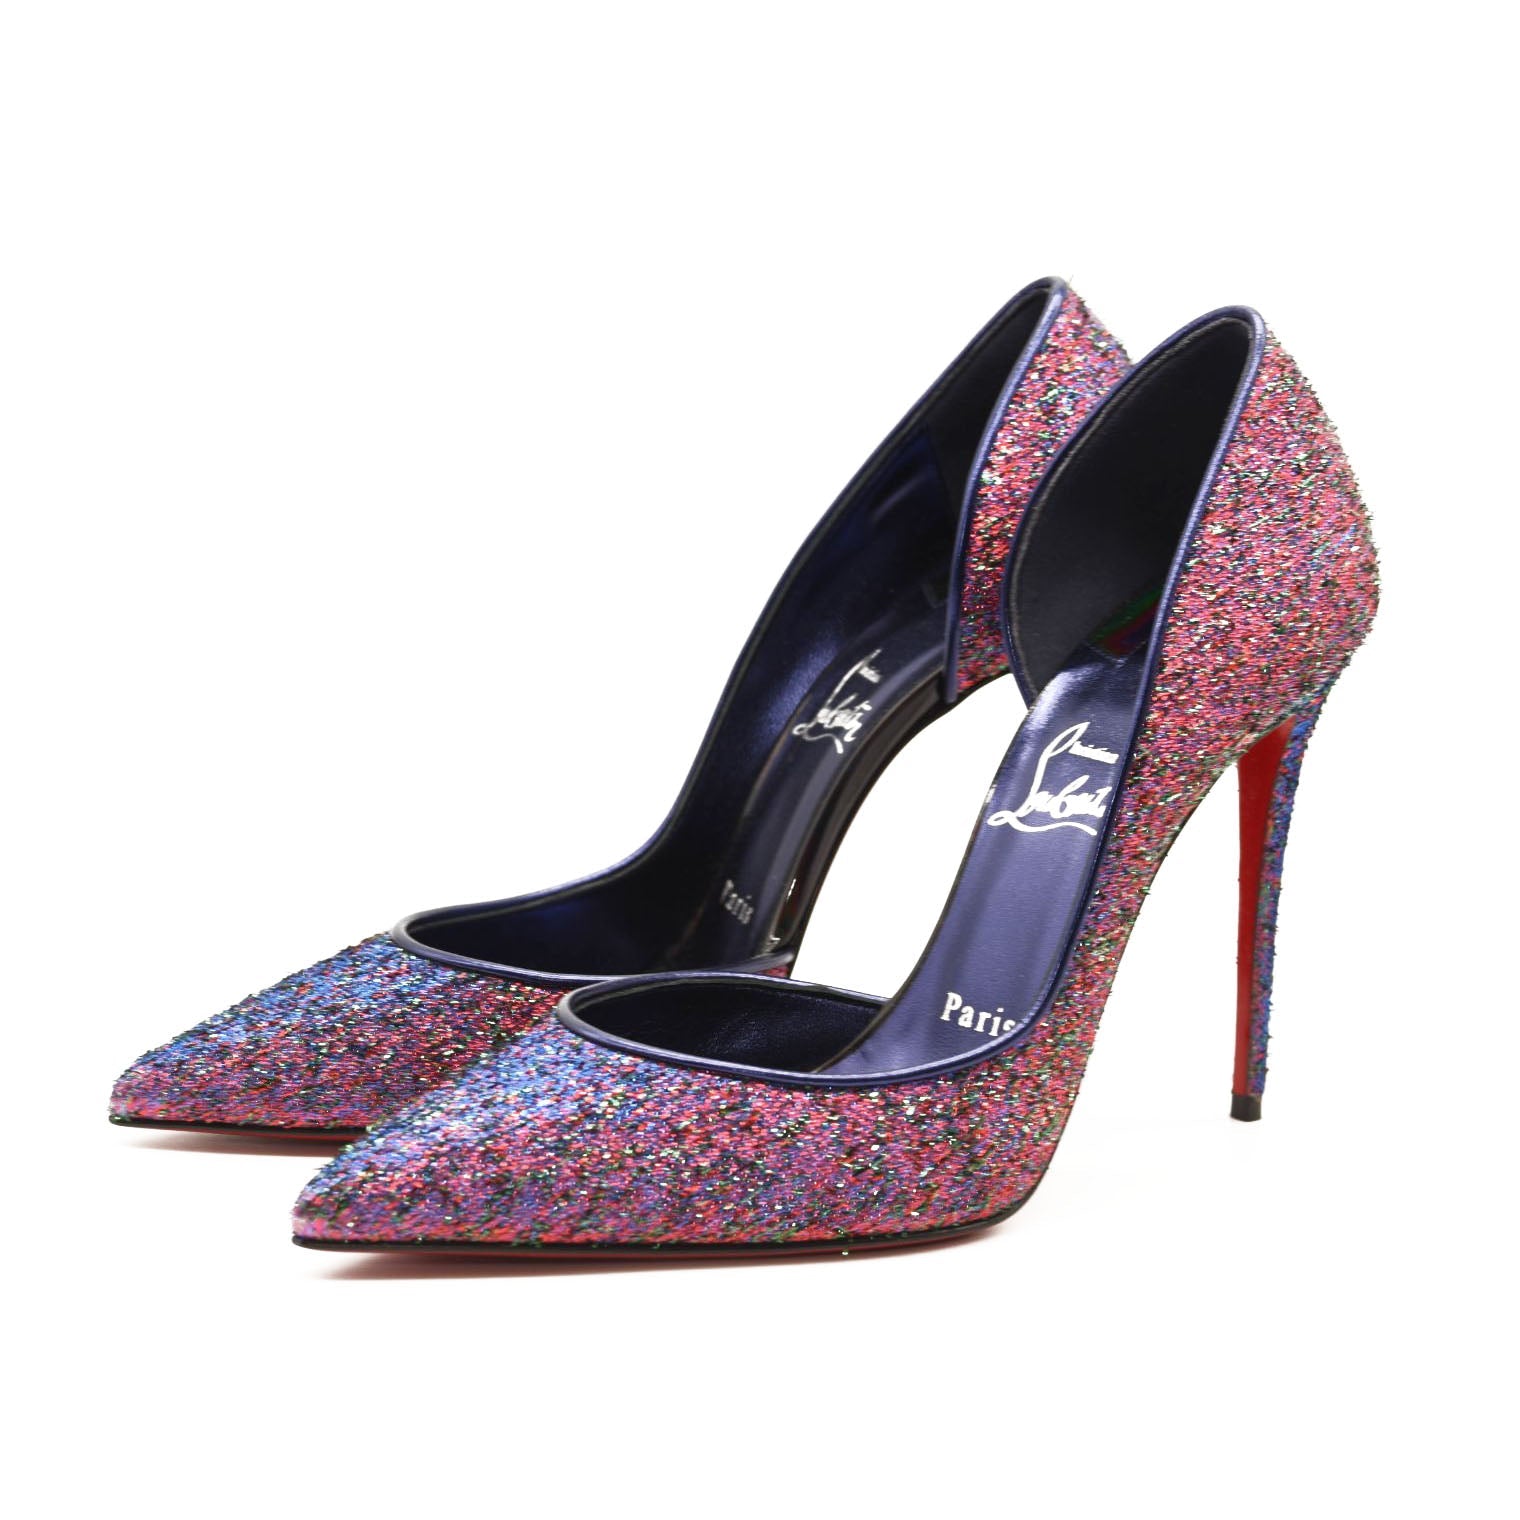 Hot chick patent leather heels Christian Louboutin Pink size 38 EU